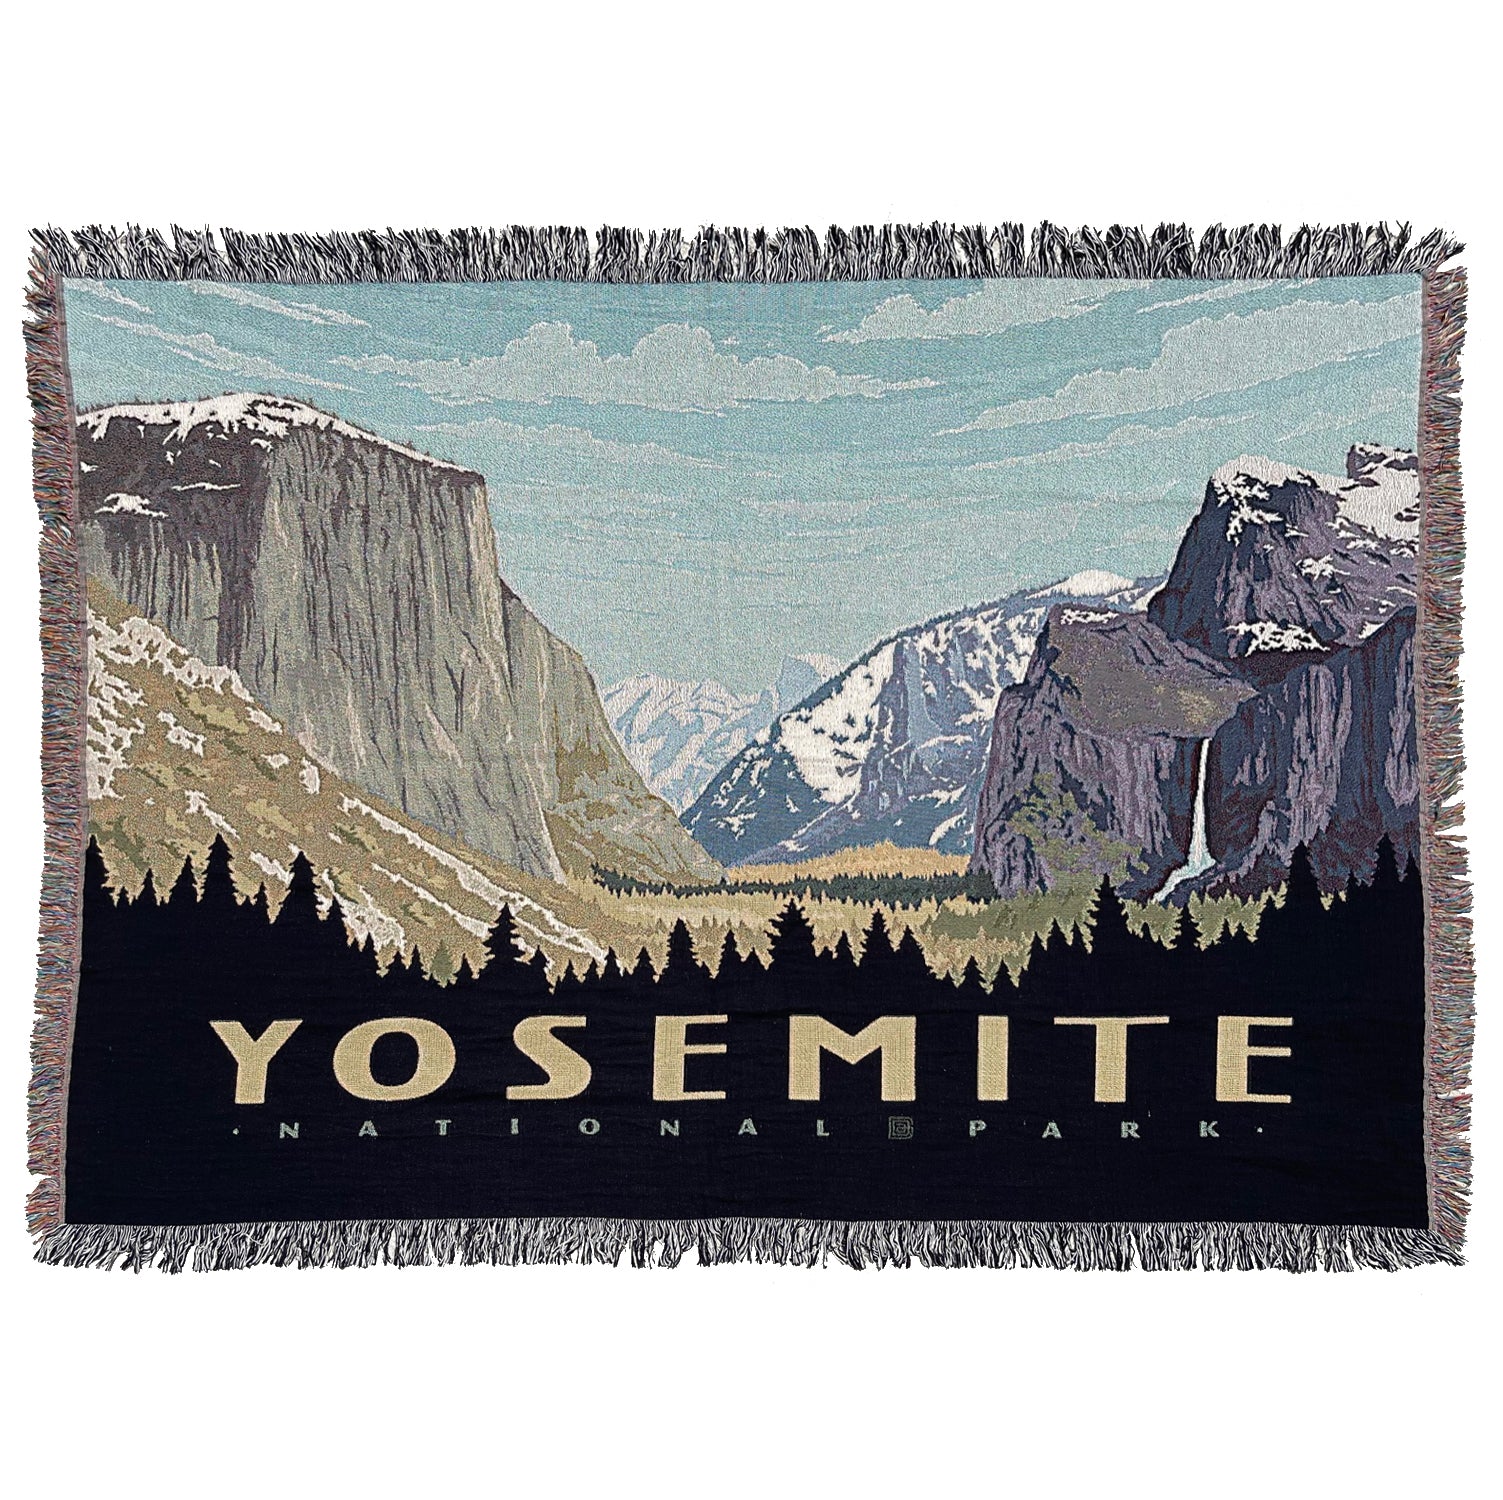 18x18 Throw Pillow: Emblem of Yosemite National Park - Anderson Design  Group